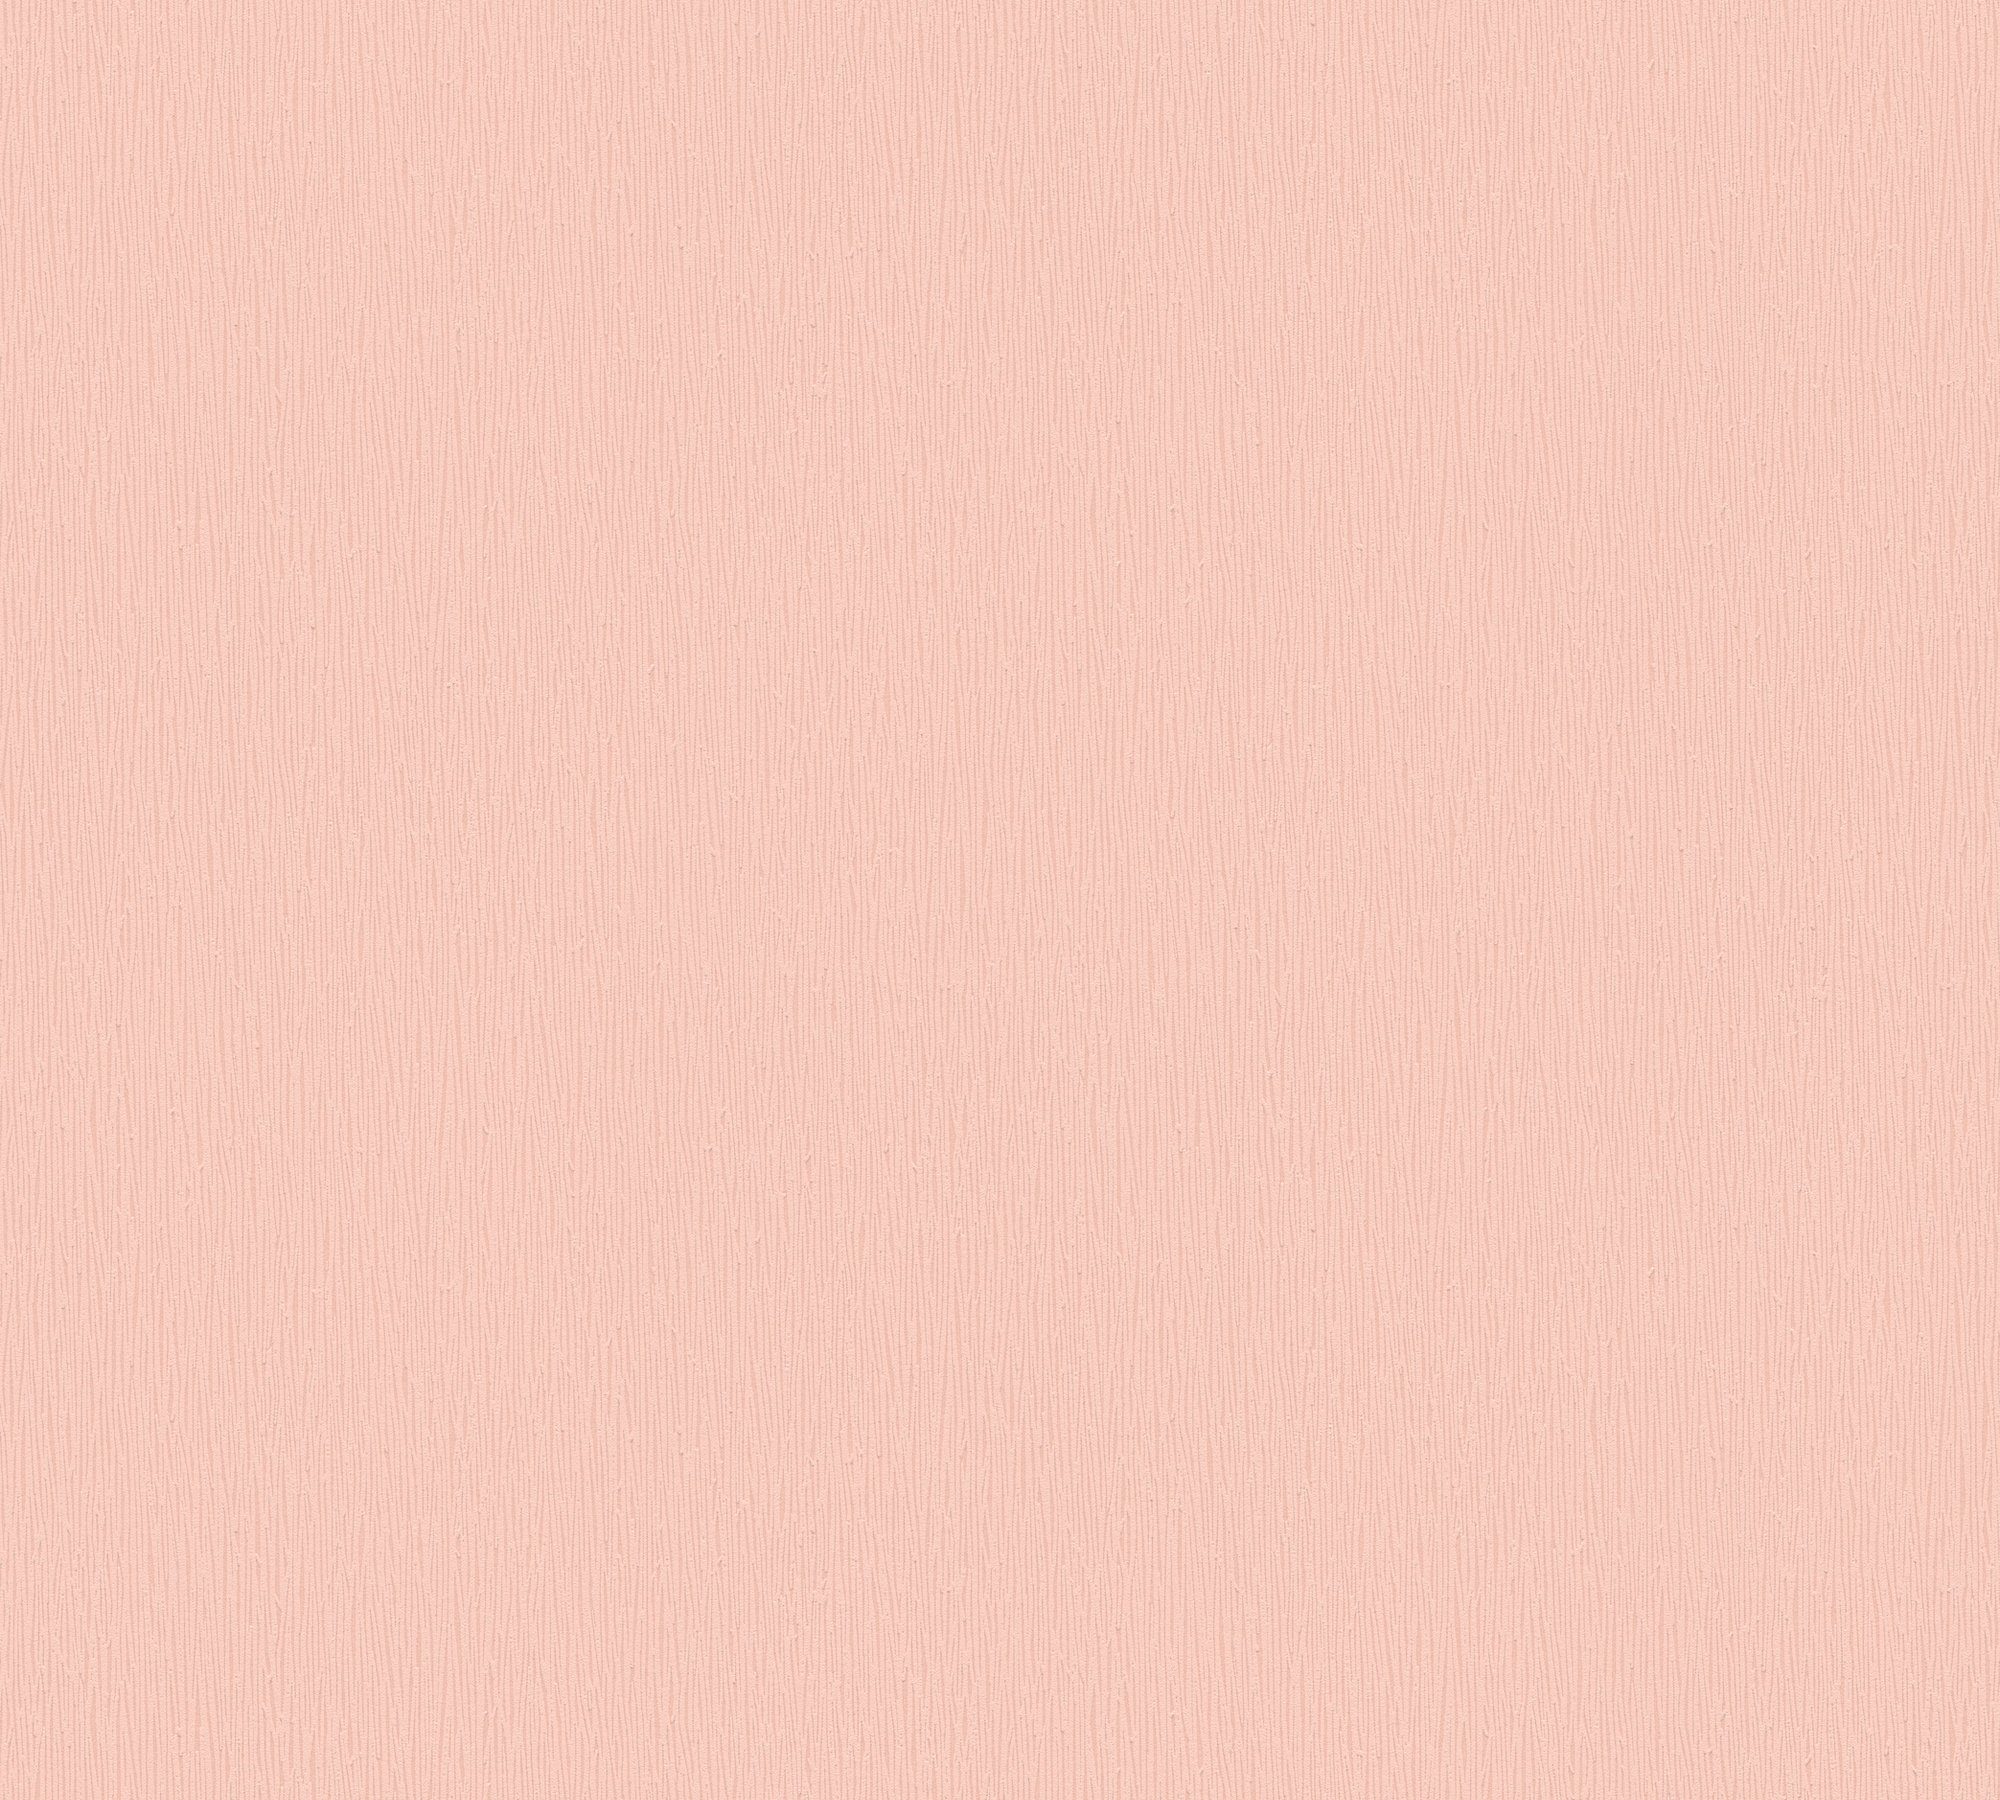 Uni Création Vliestapete rosa/weiß unifarben, A.S. Trendwall, einfarbig, Tapete